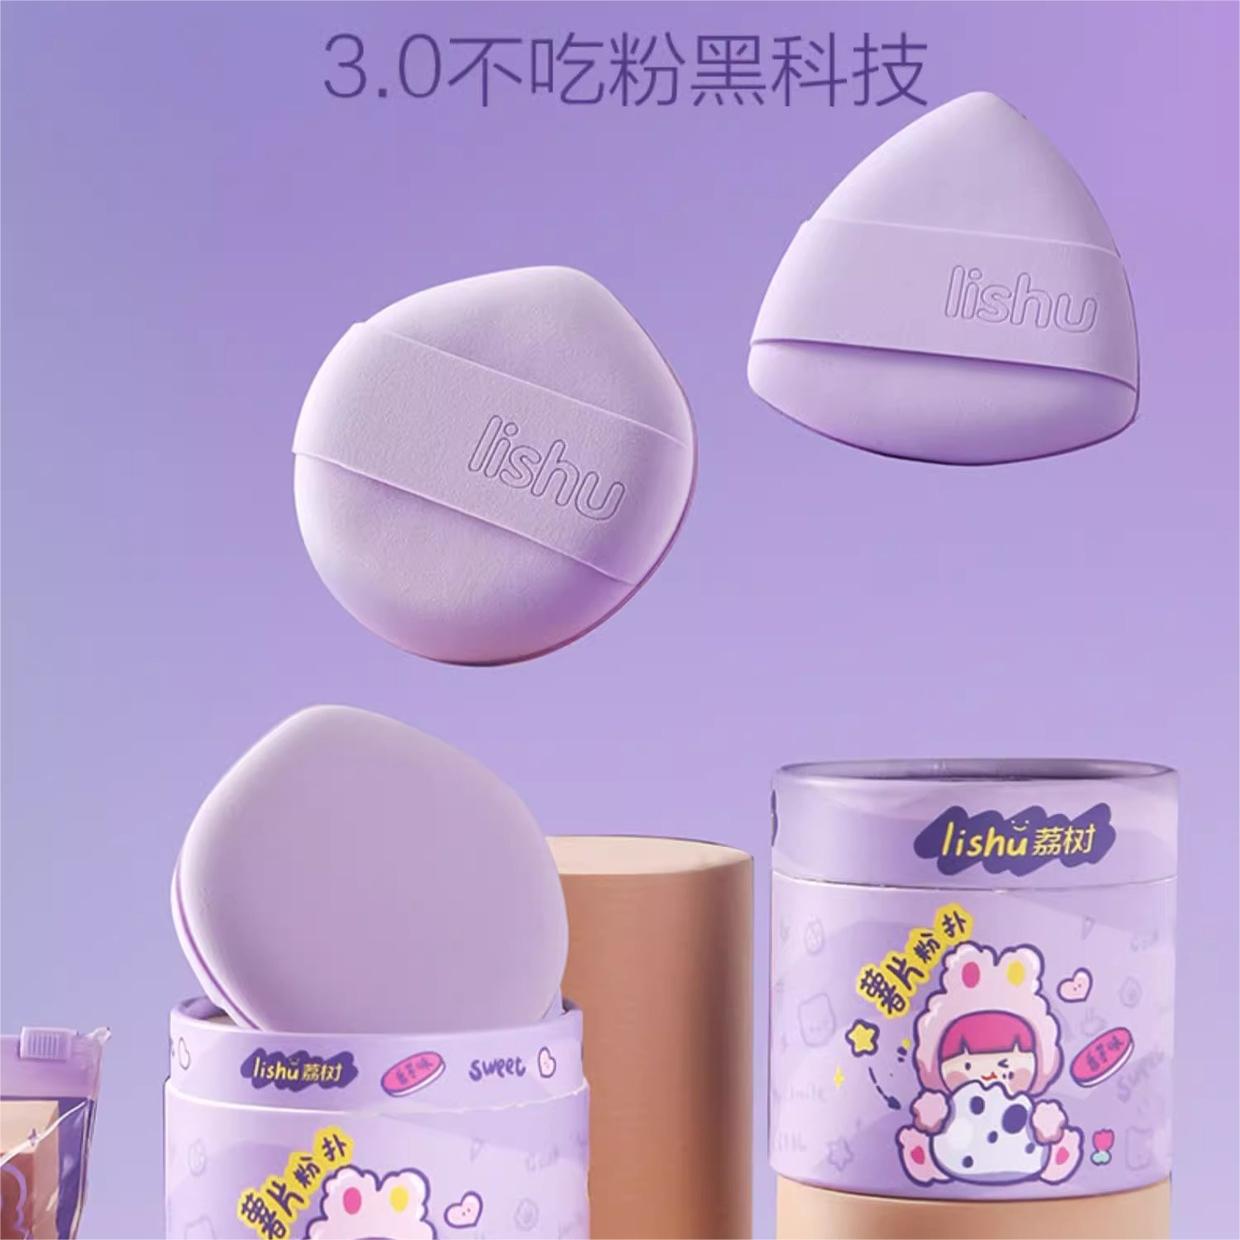 LISHU Potato Chip Makeup Sponge in Taro Flavor 荔树薯片粉扑香芋口味